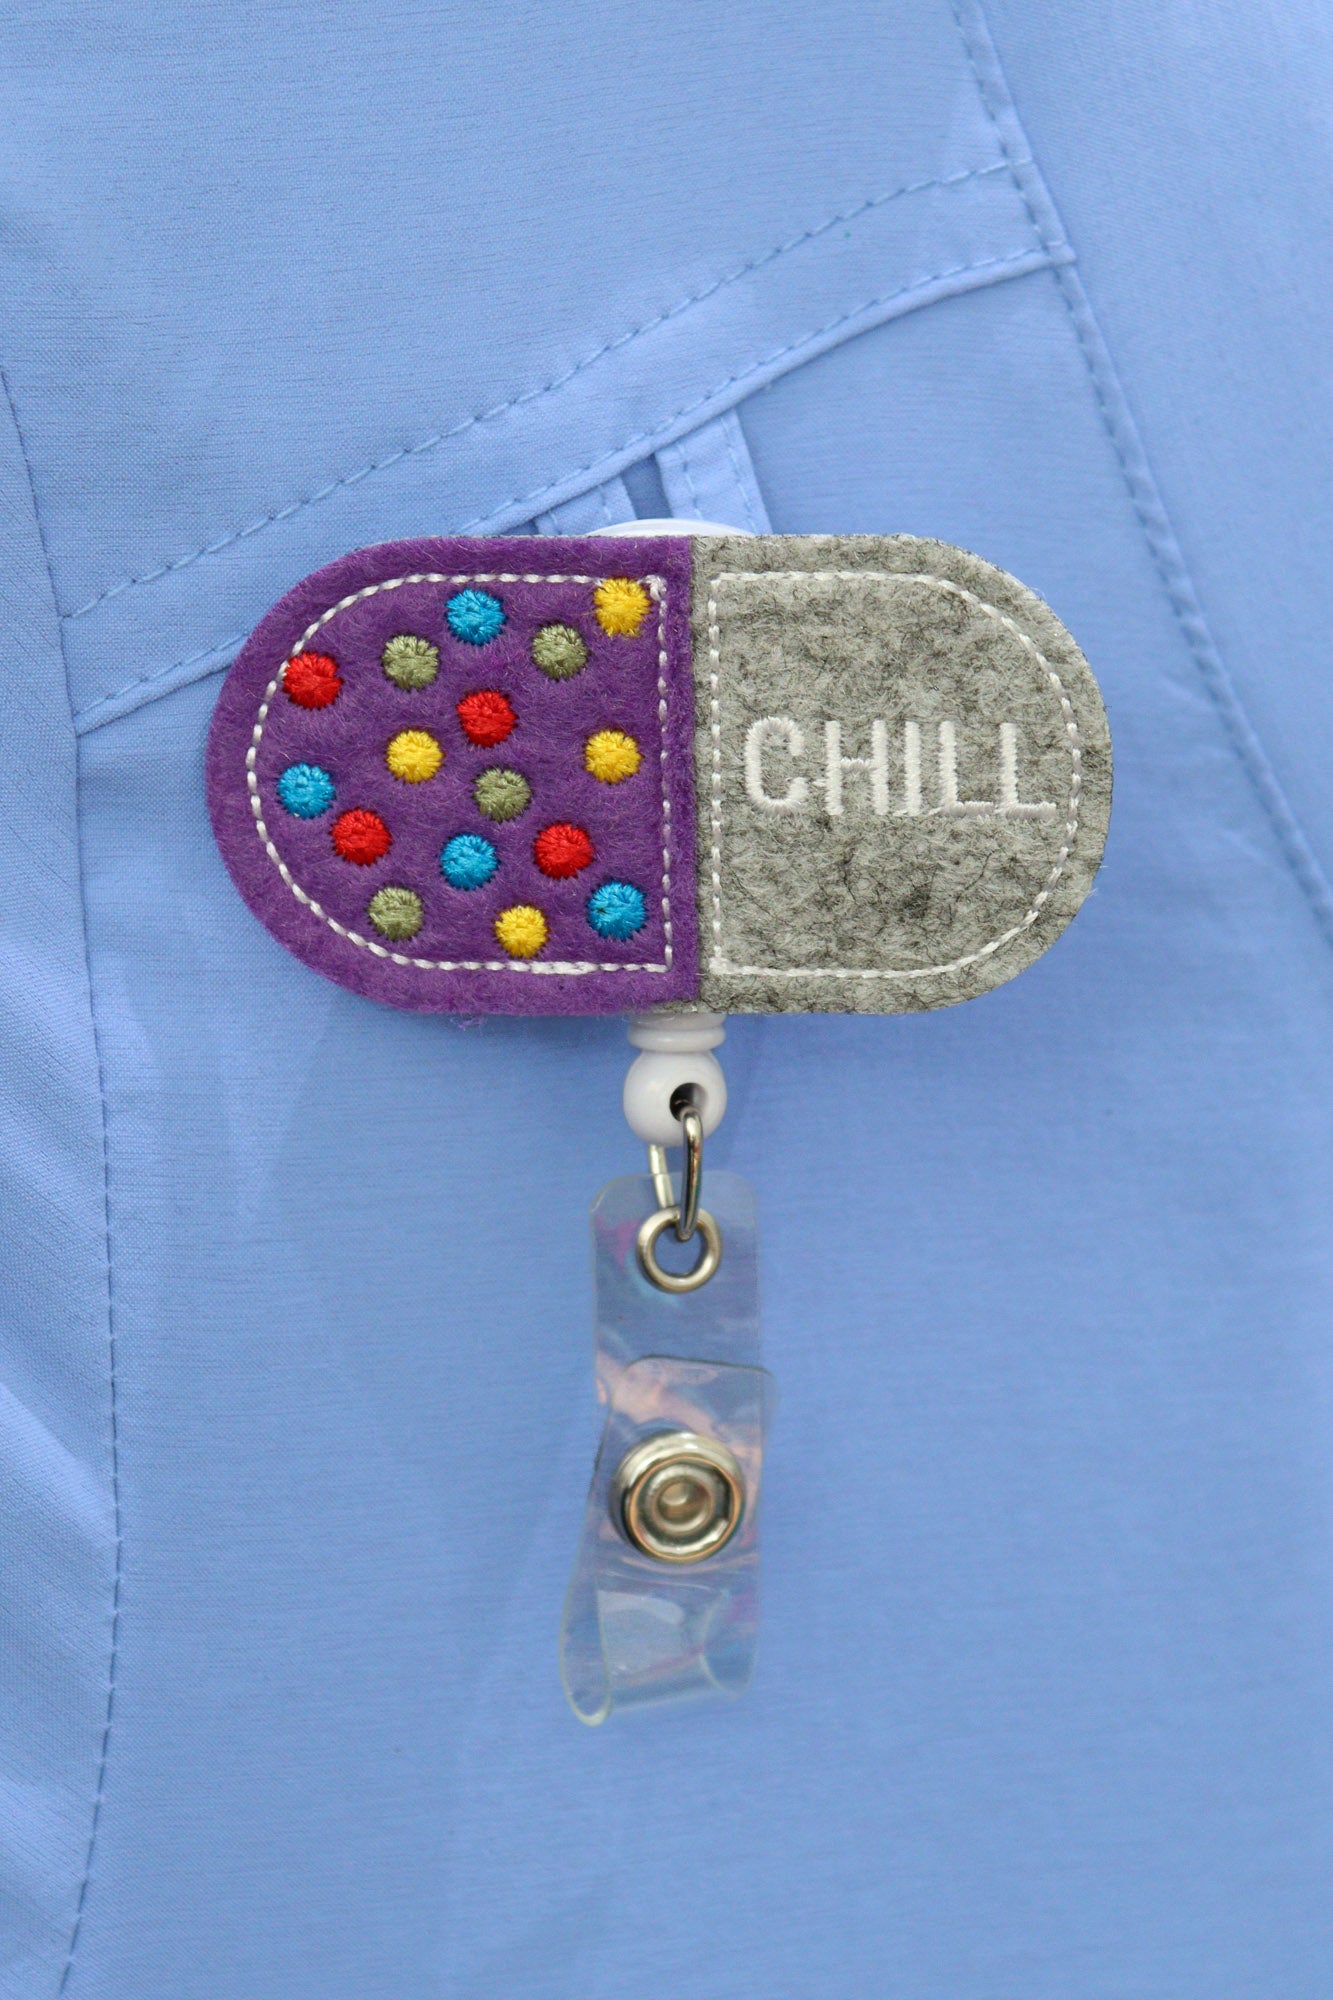 Chill Pill ID Badge